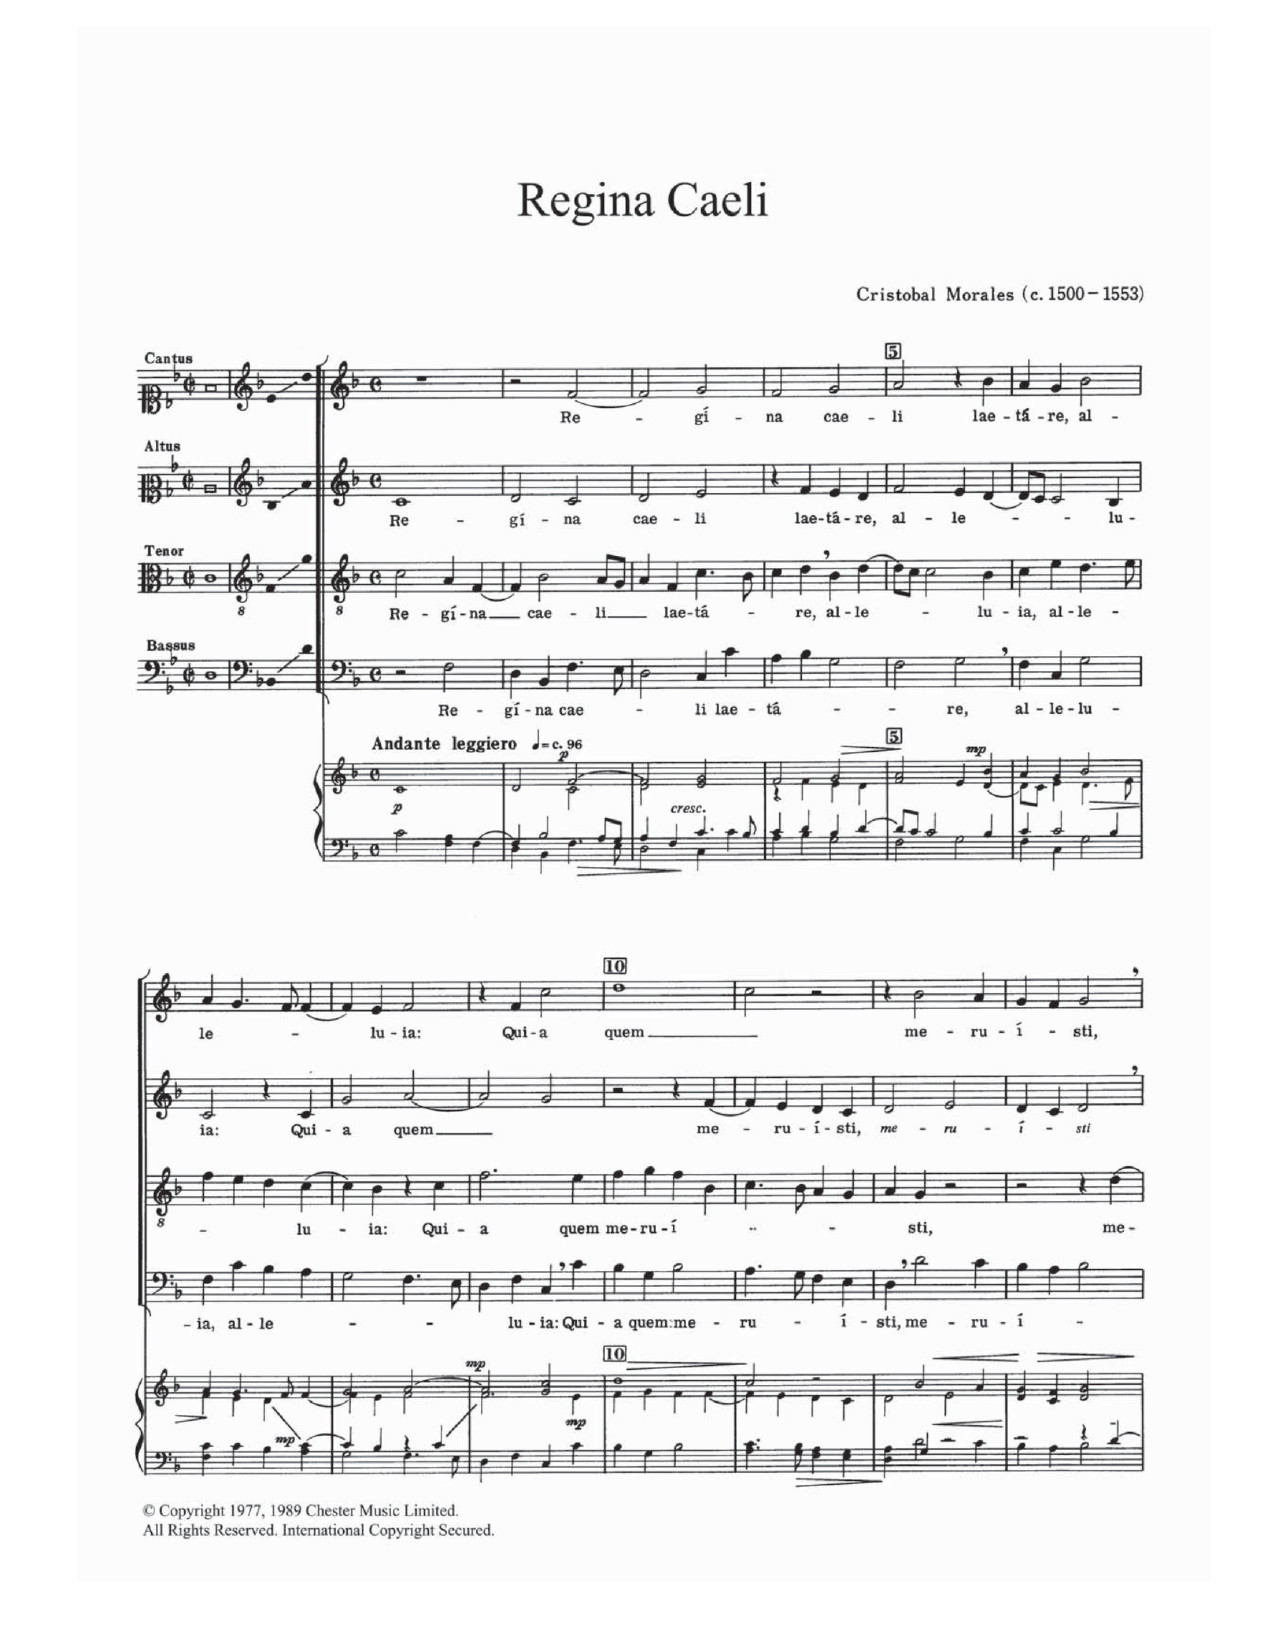 Cristobal de Morales Regina Caeli sheet music notes and chords arranged for Choir